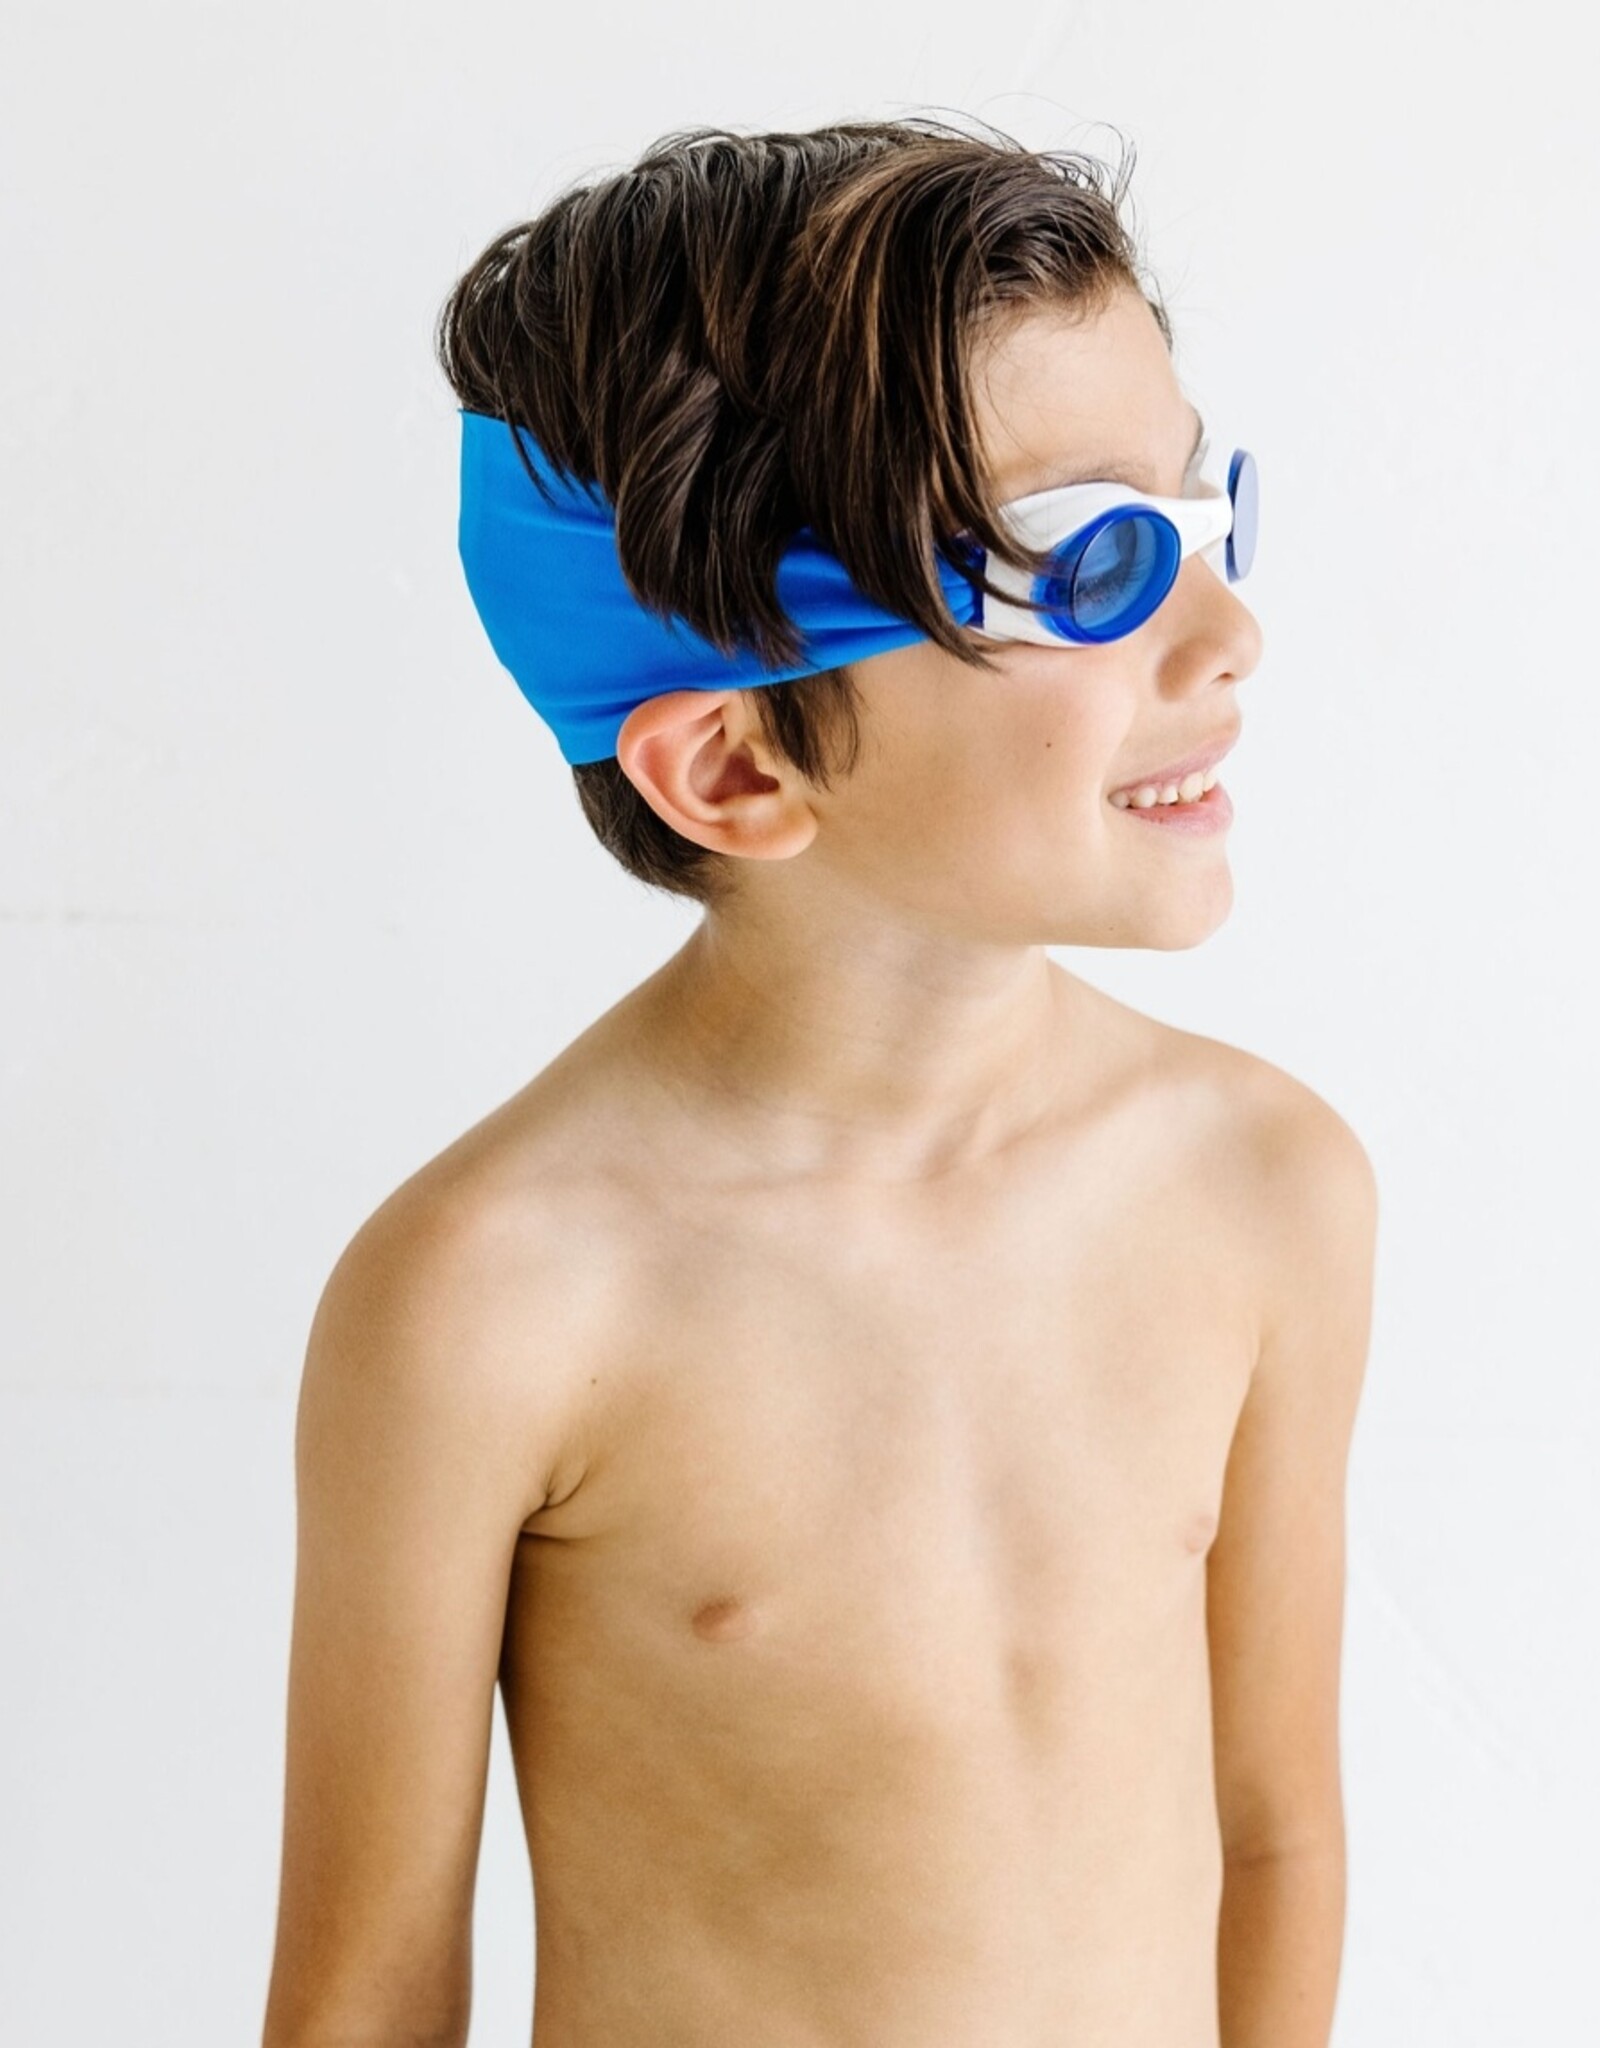 Splash Swim Goggles Splash Swim Goggles Royal Blue